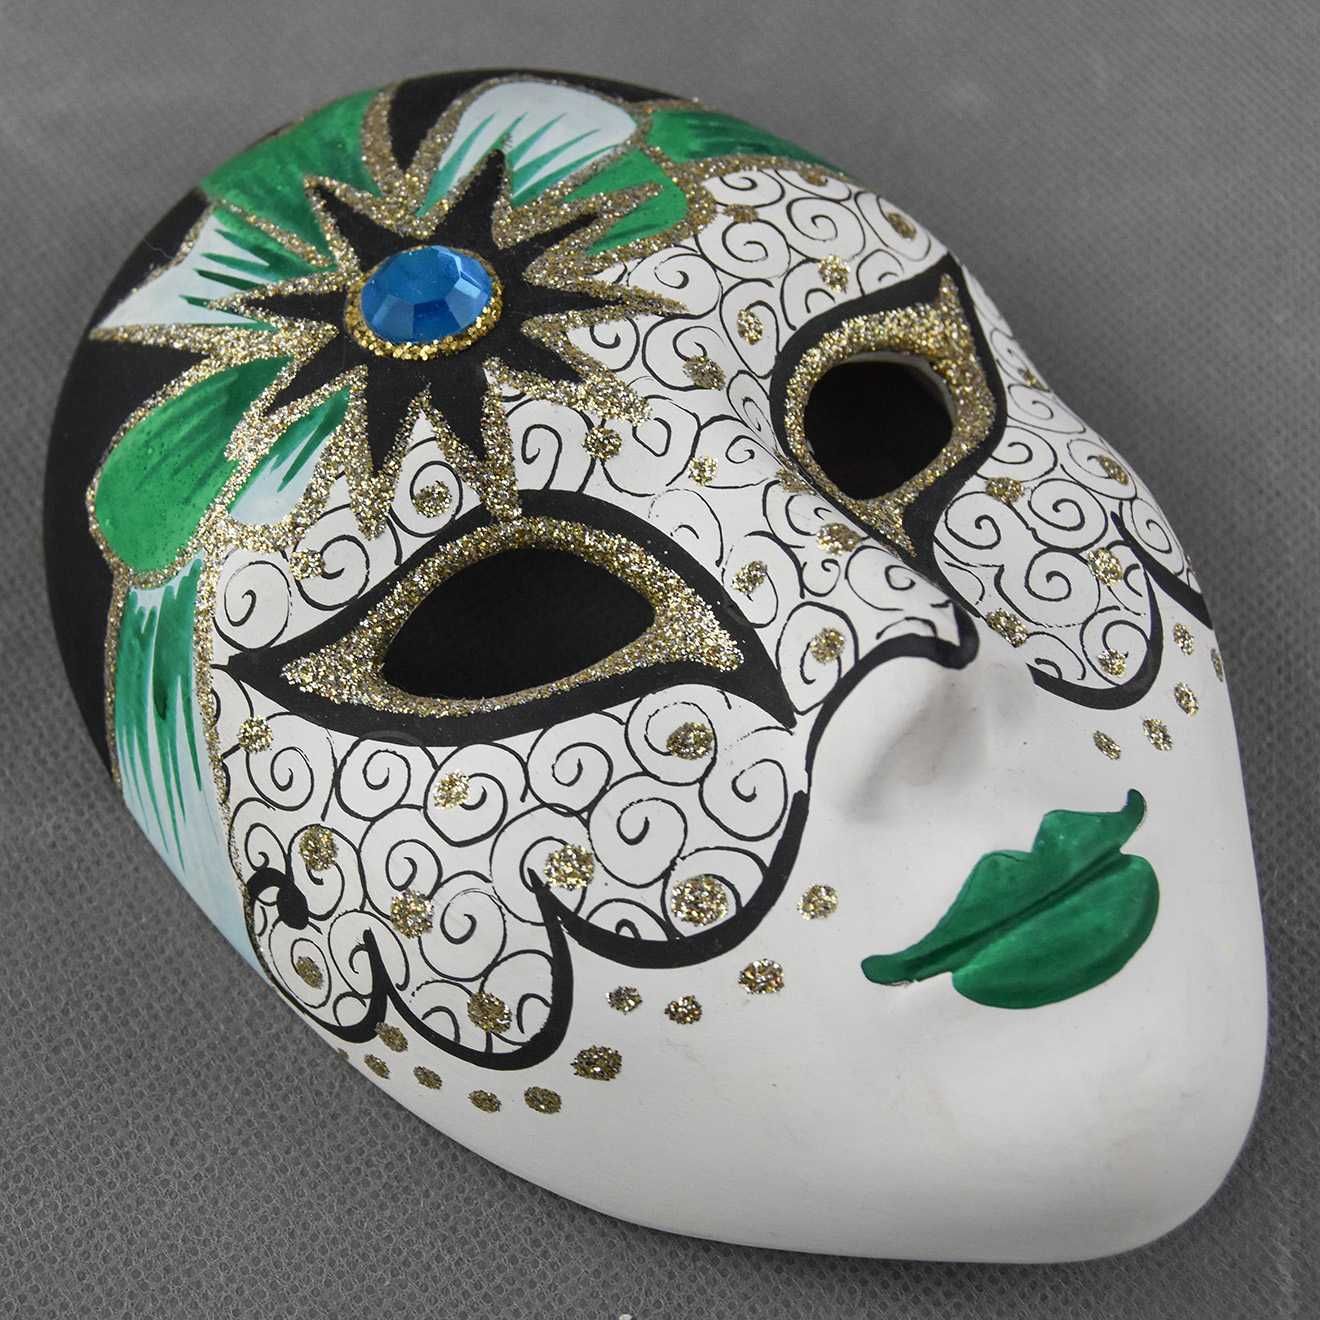 Máscara Veneziana em biscuit, com marca de autenticidade